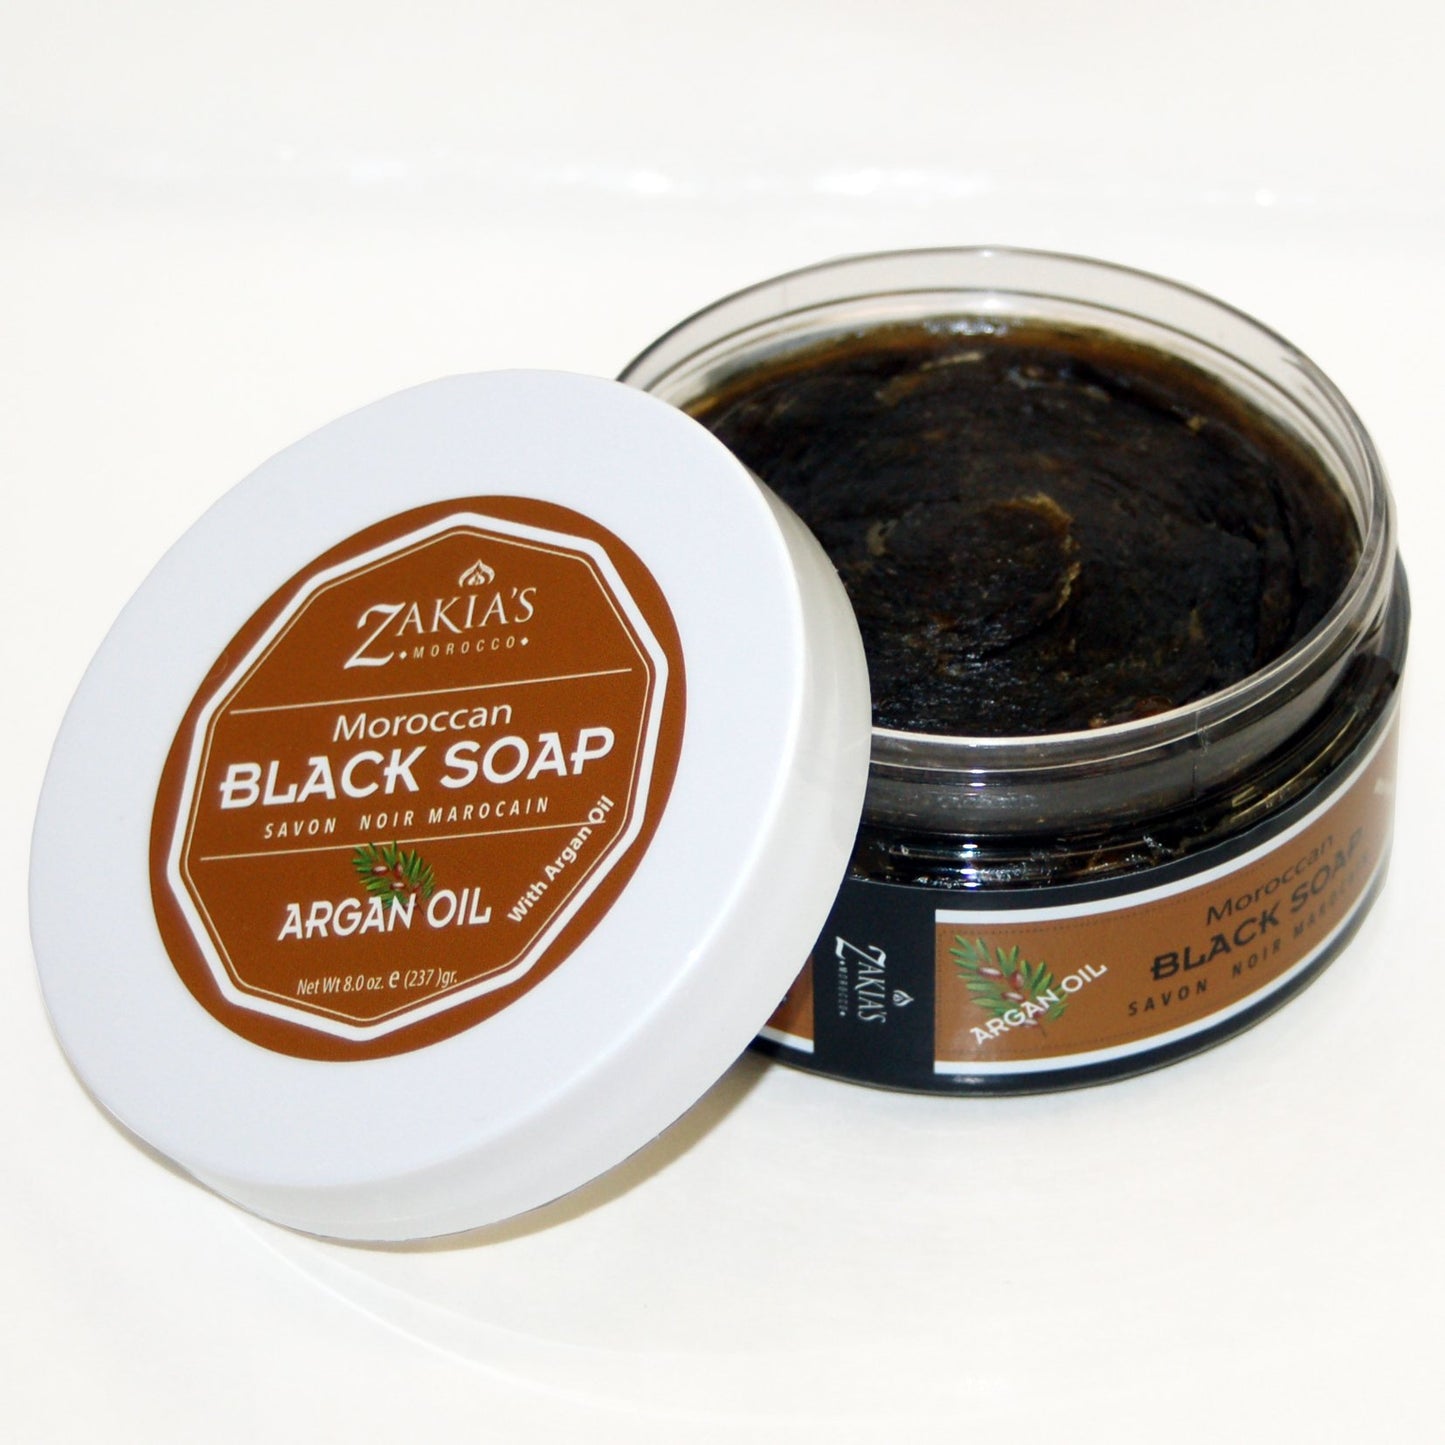 Moroccan "BELDI" Black Soap - Argan Oil - 8 oz